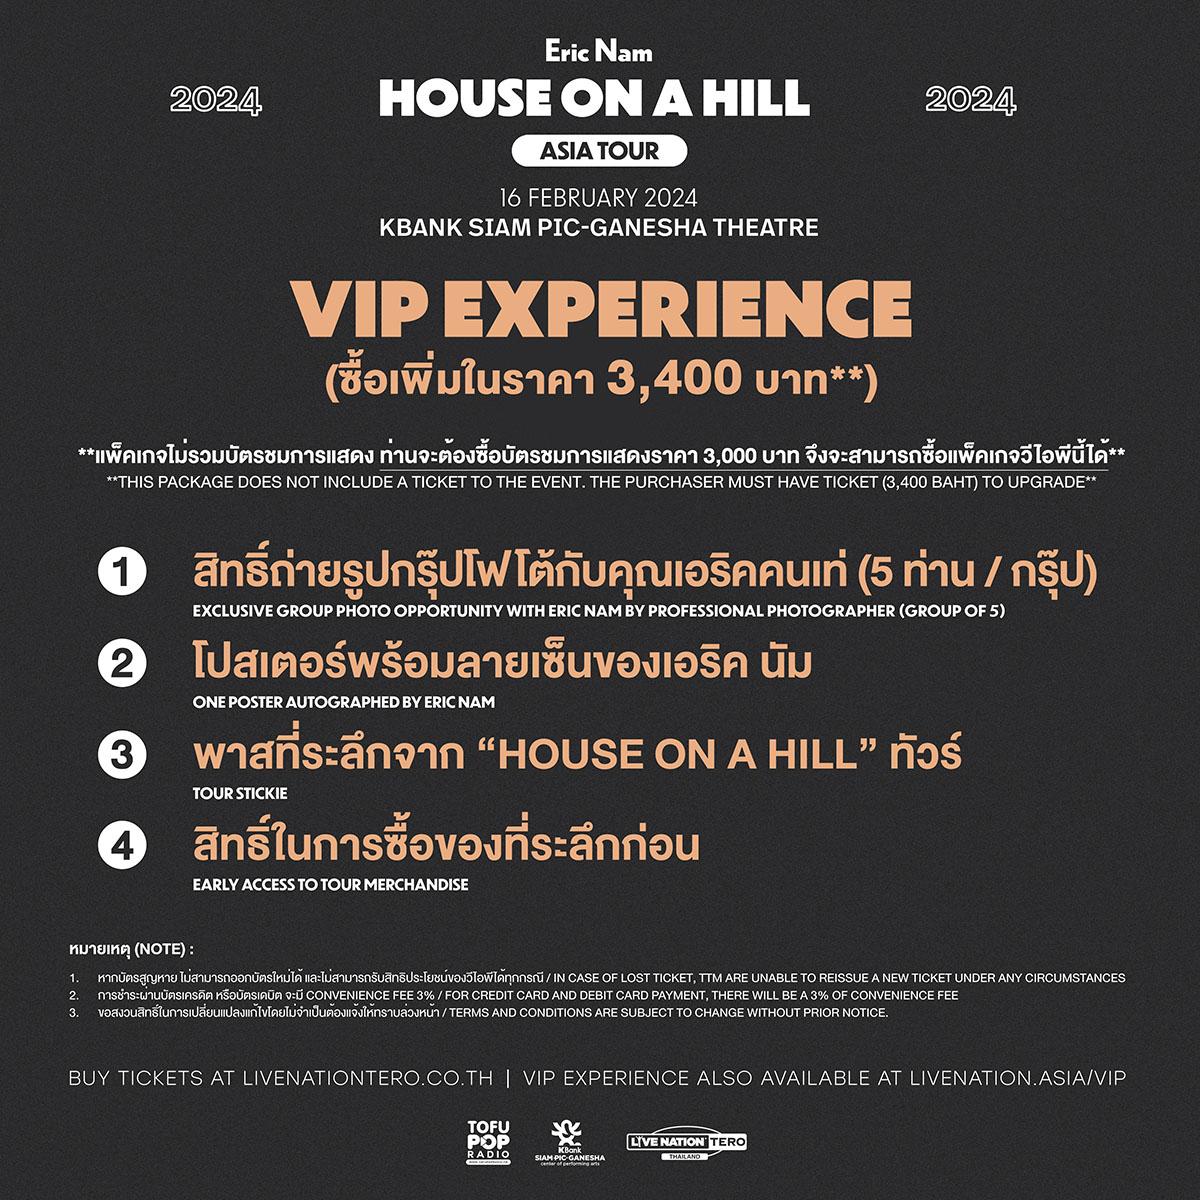 House-on-a-Hill-Bangkok-Eric-Nam-asia-tour-SPACEBAR-Photo03.jpg